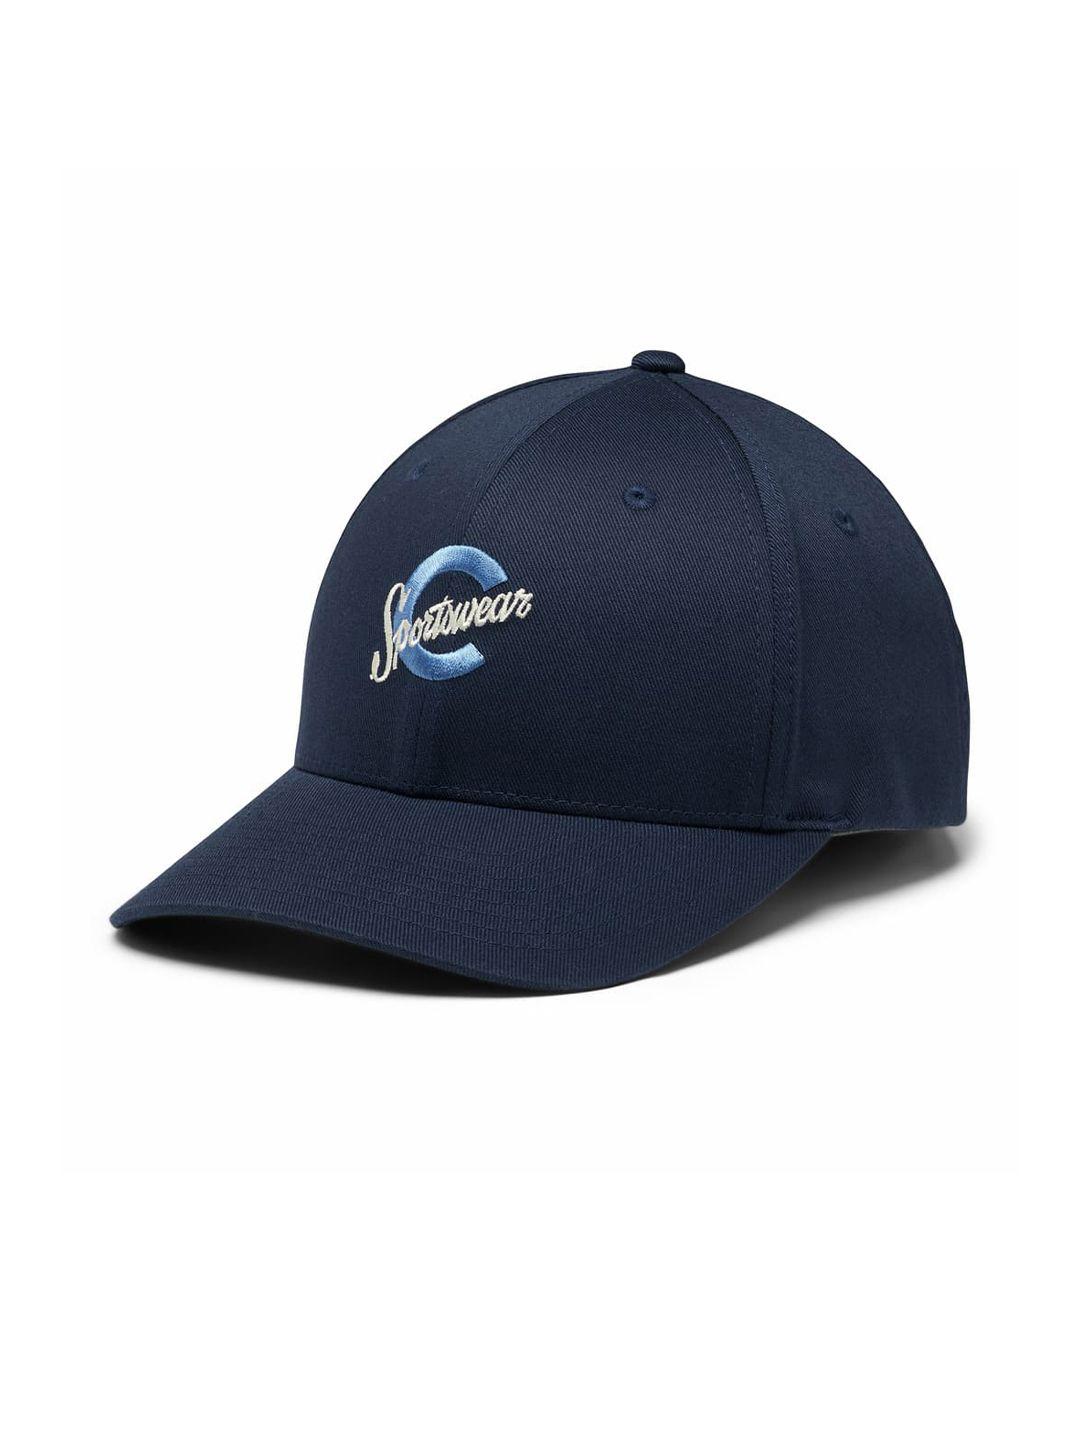 columbia unisex blue embroidered baseball cap